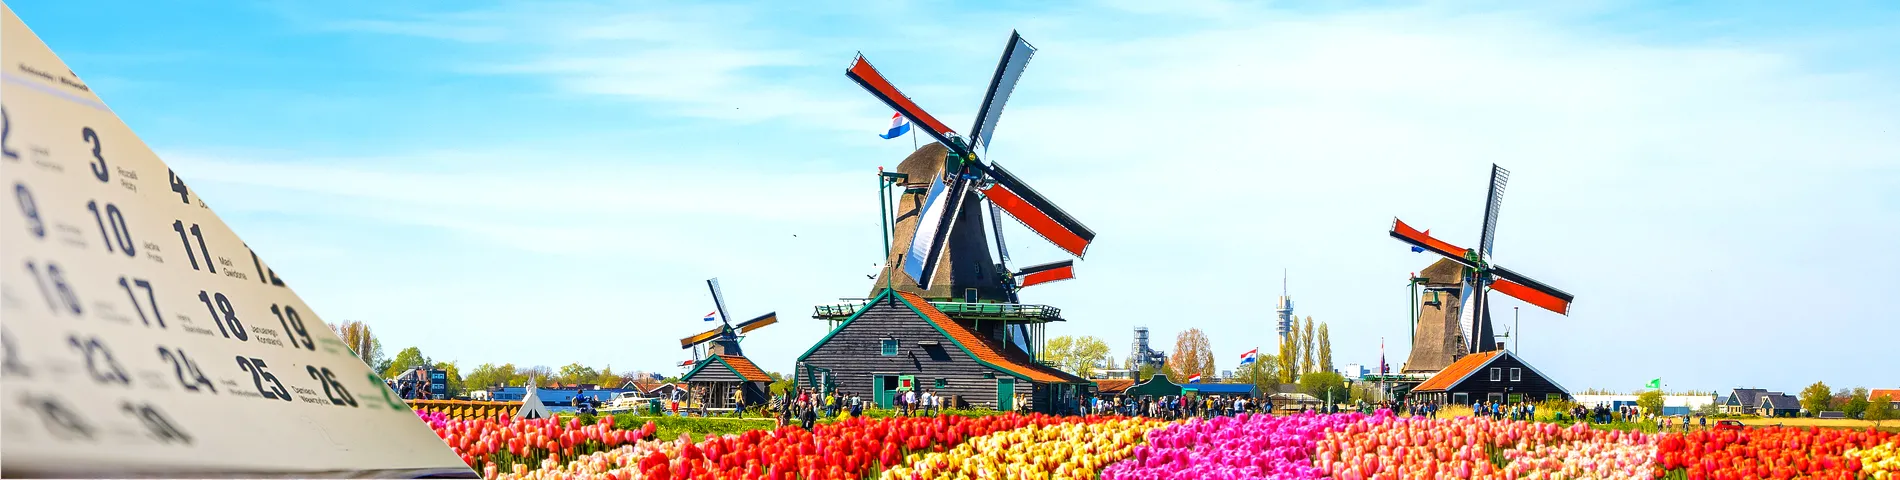 Paesi Bassi - Olandese annuale 